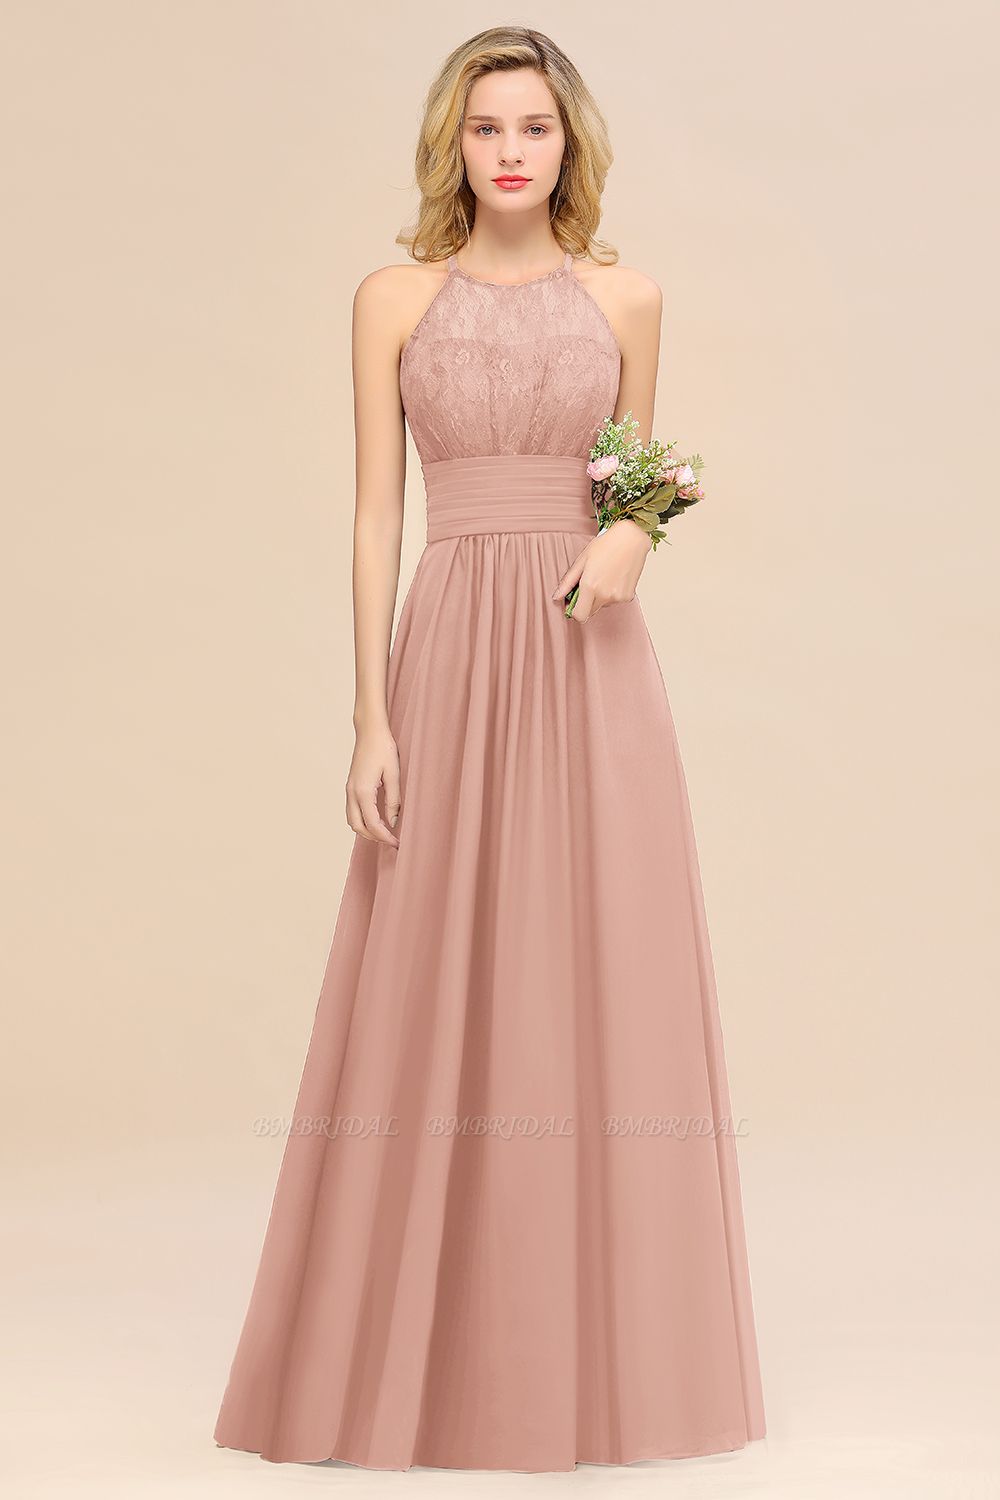 BMbridal Elegant Halter Ruffles Sleeveless Grape Lace Bridesmaid Dresses Affordable